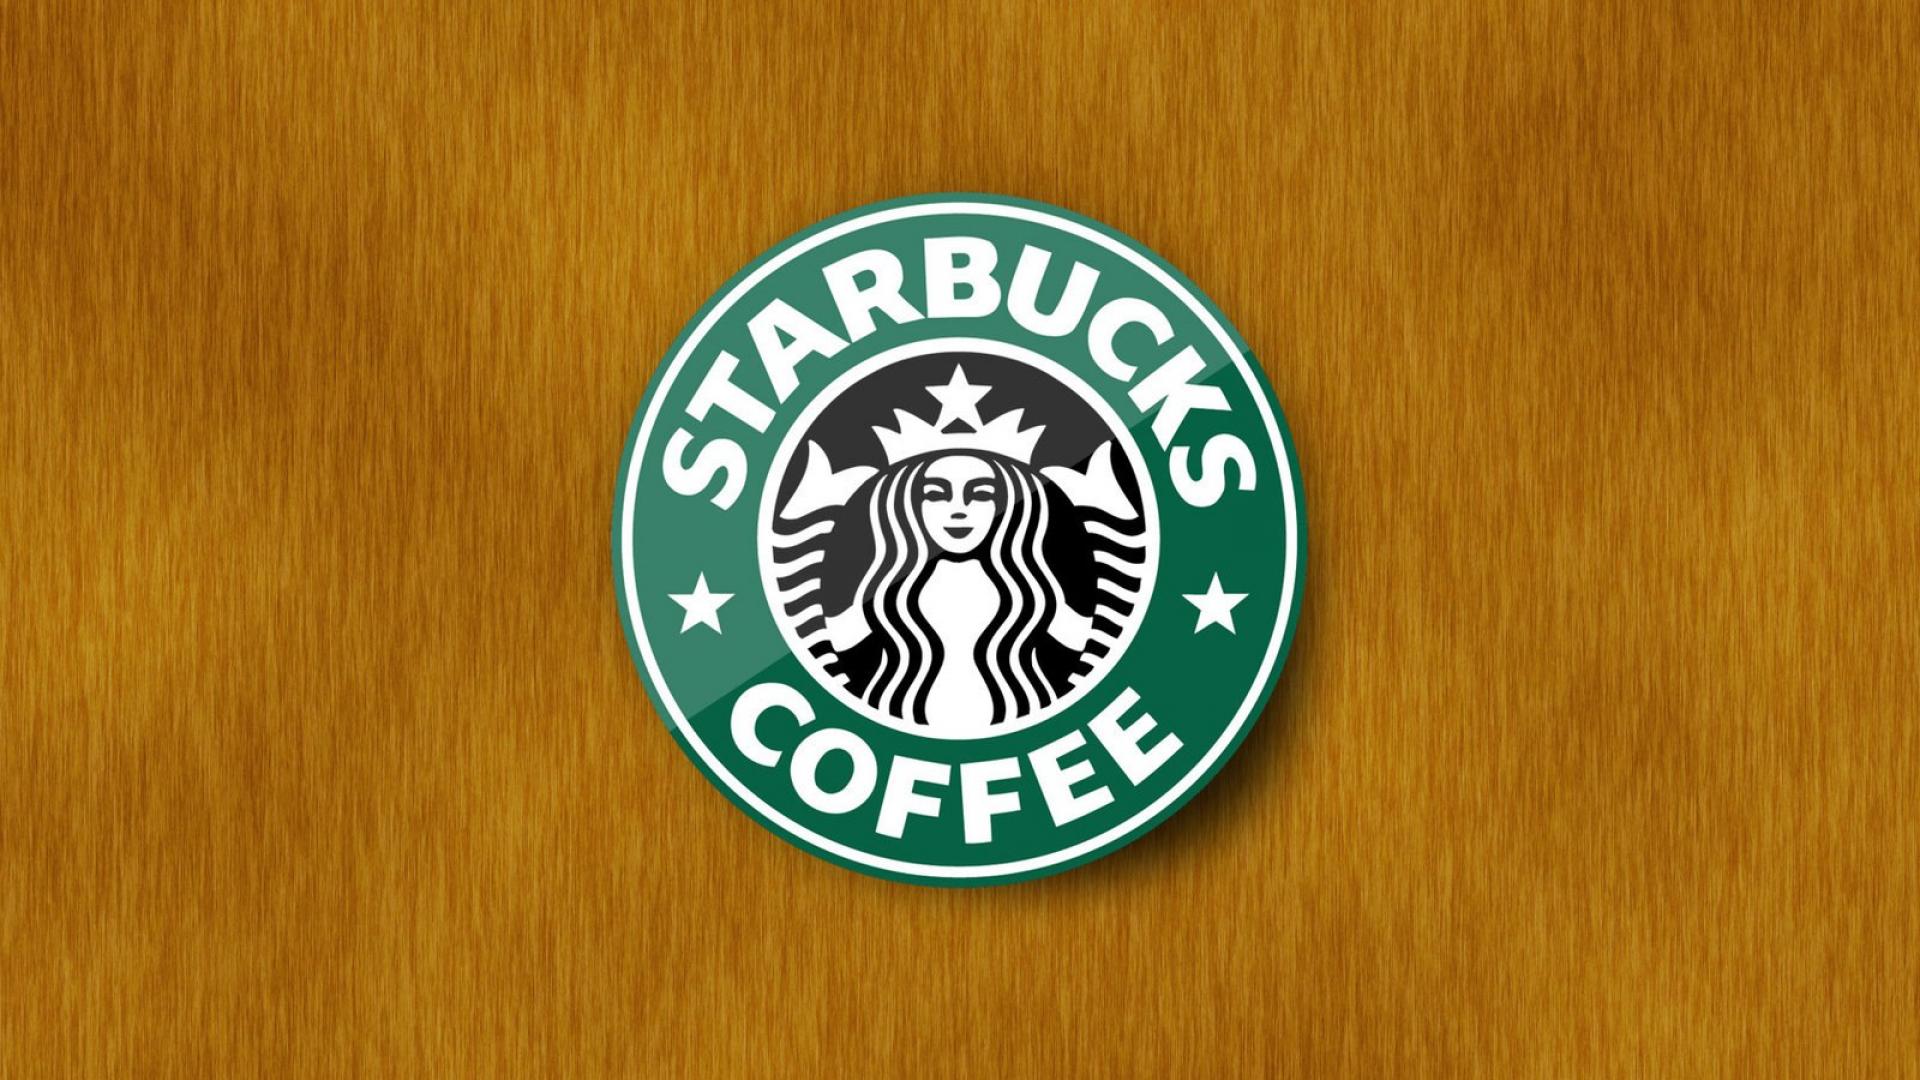 Starbucks logos hd wallpaper - - HQ Desktop Wallpapers